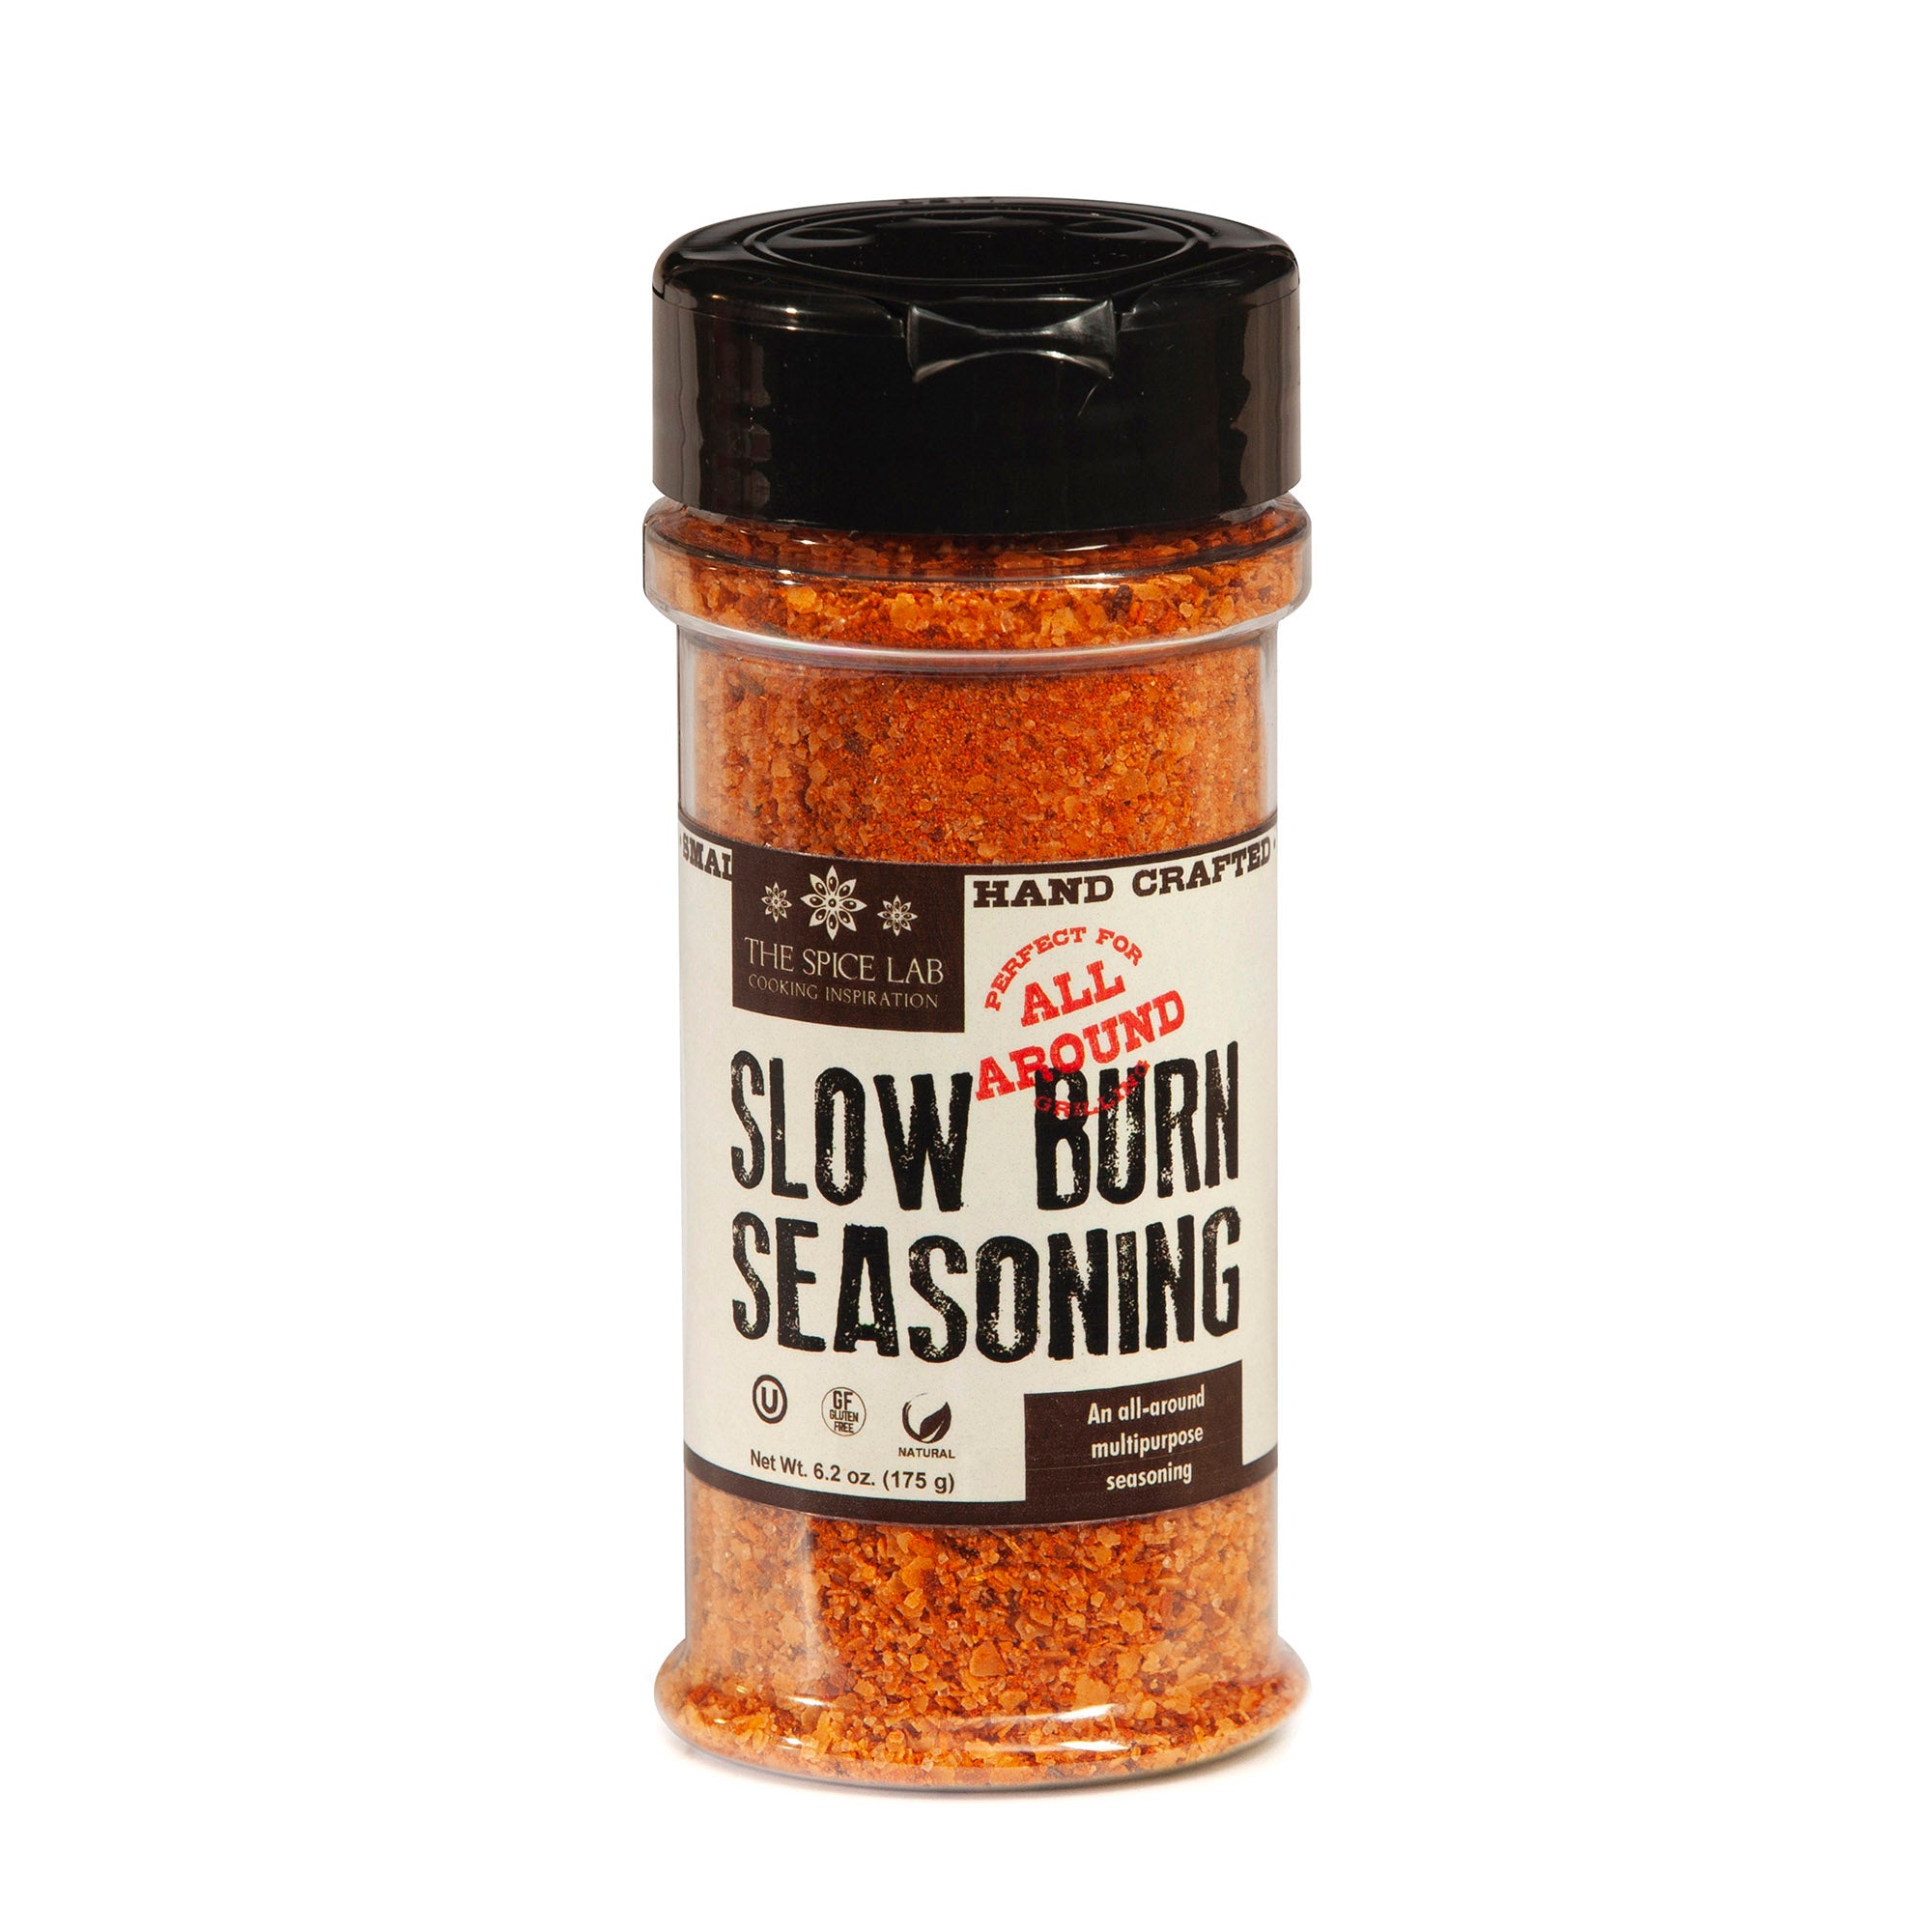 Award Winning Chef Creates Amazing Seasoning and Spice Line